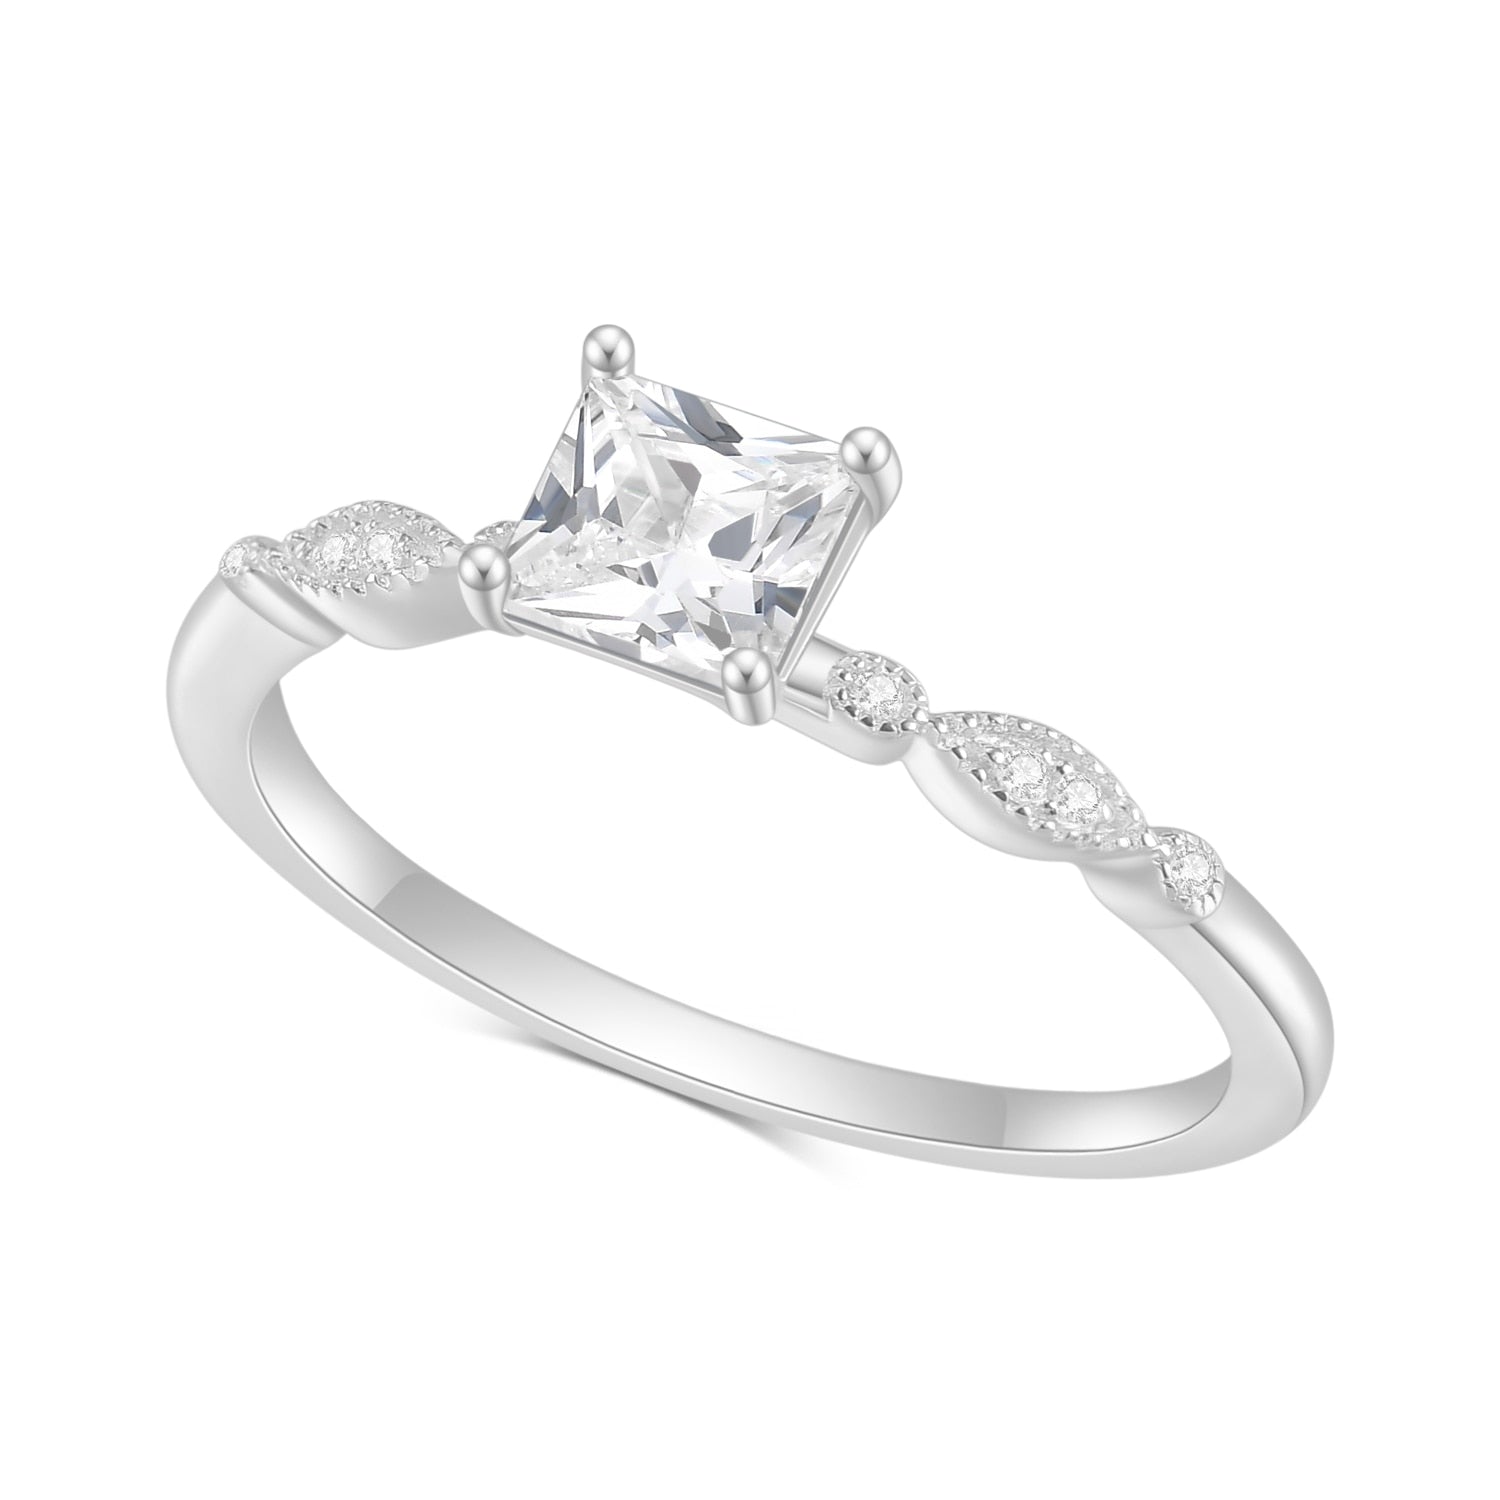 A silver art deco princess cut moissanite engagement ring.